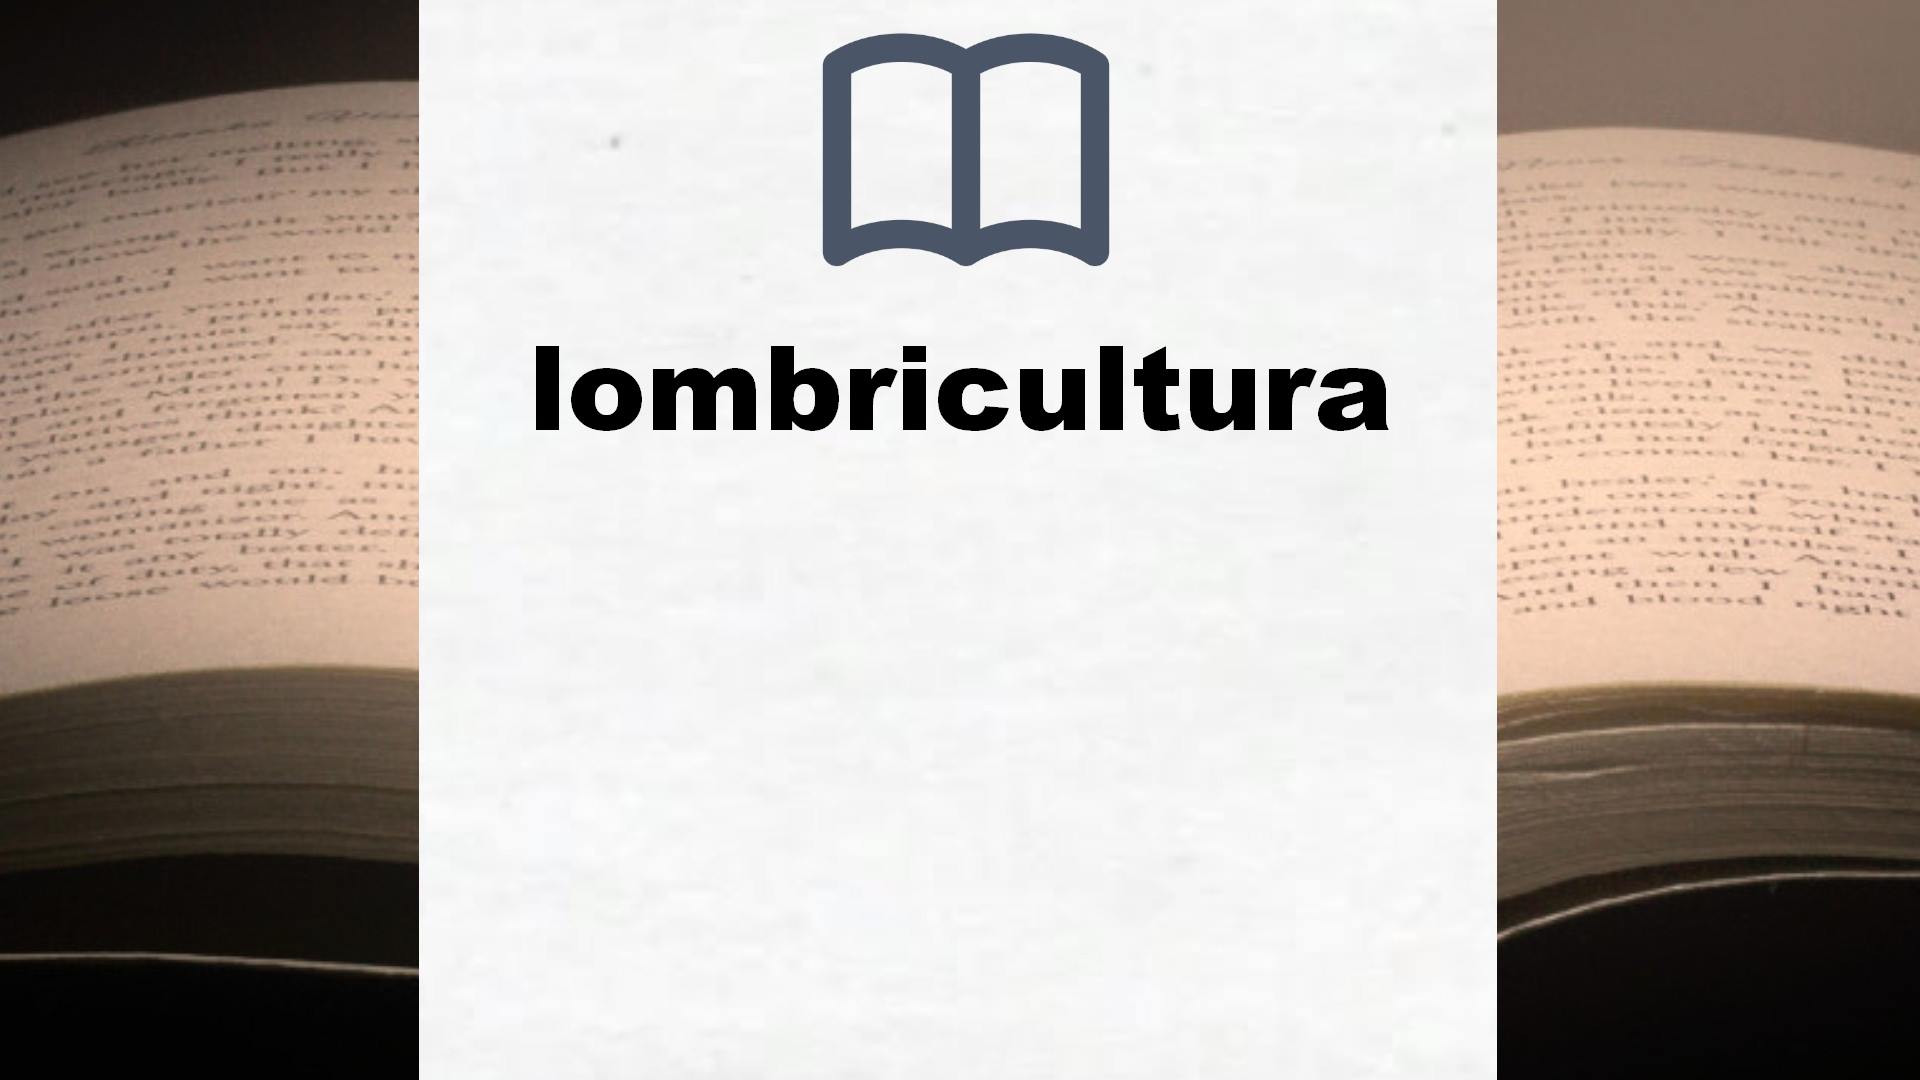 Libros sobre lombricultura